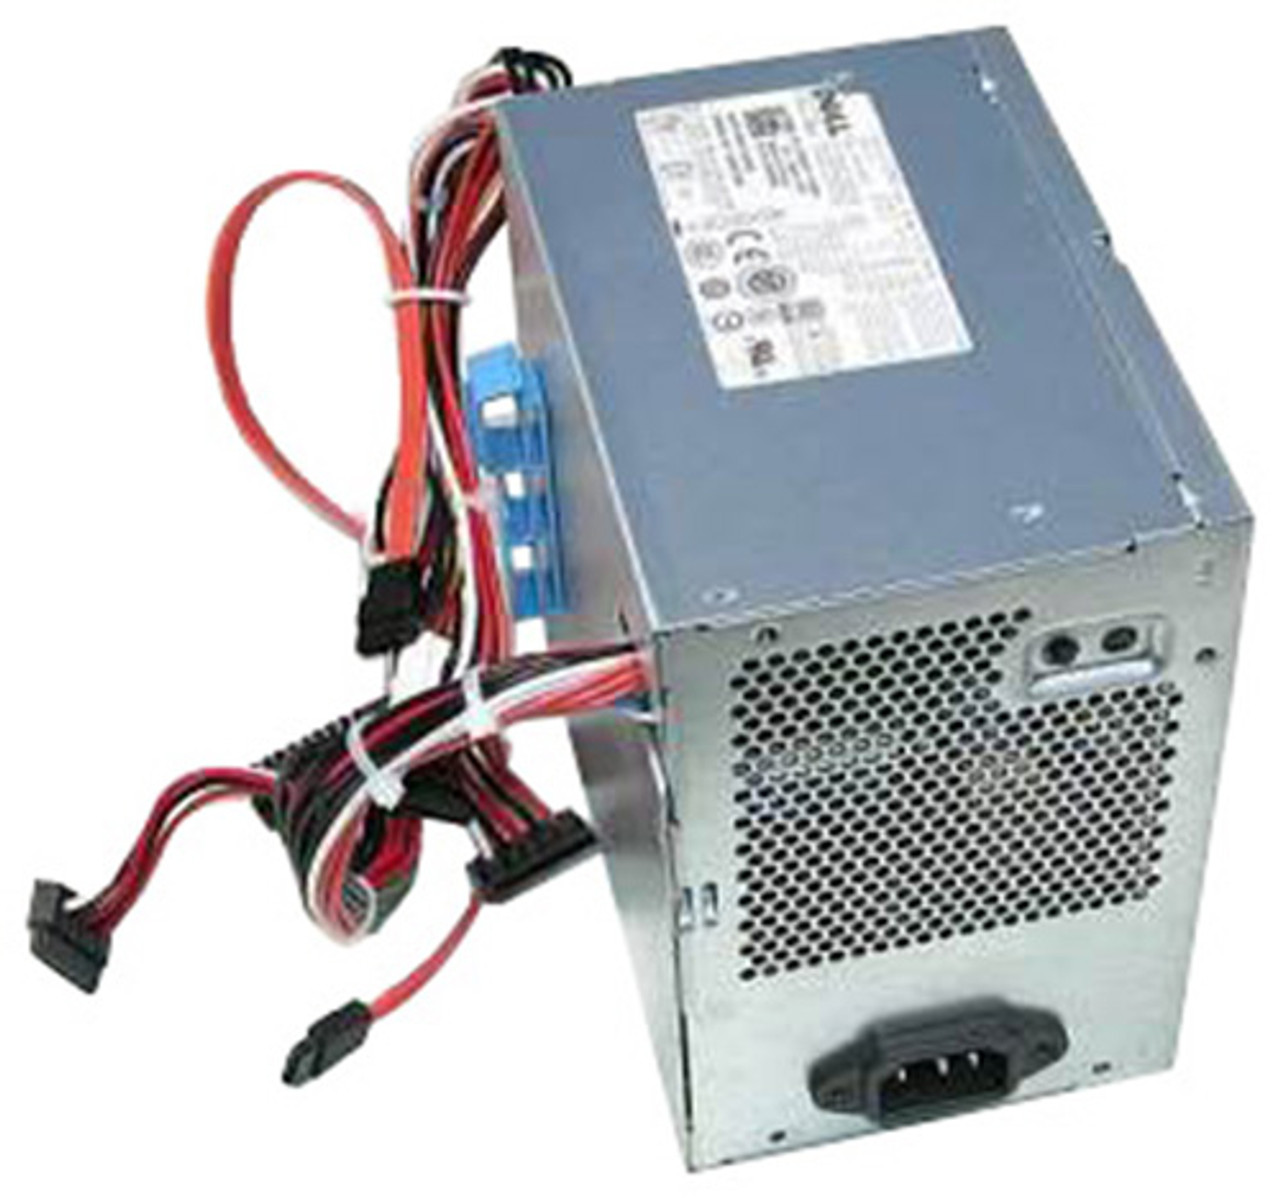 0M8806 - Dell 305-Watts Power Supply for Optiplex GX620 MiniTower